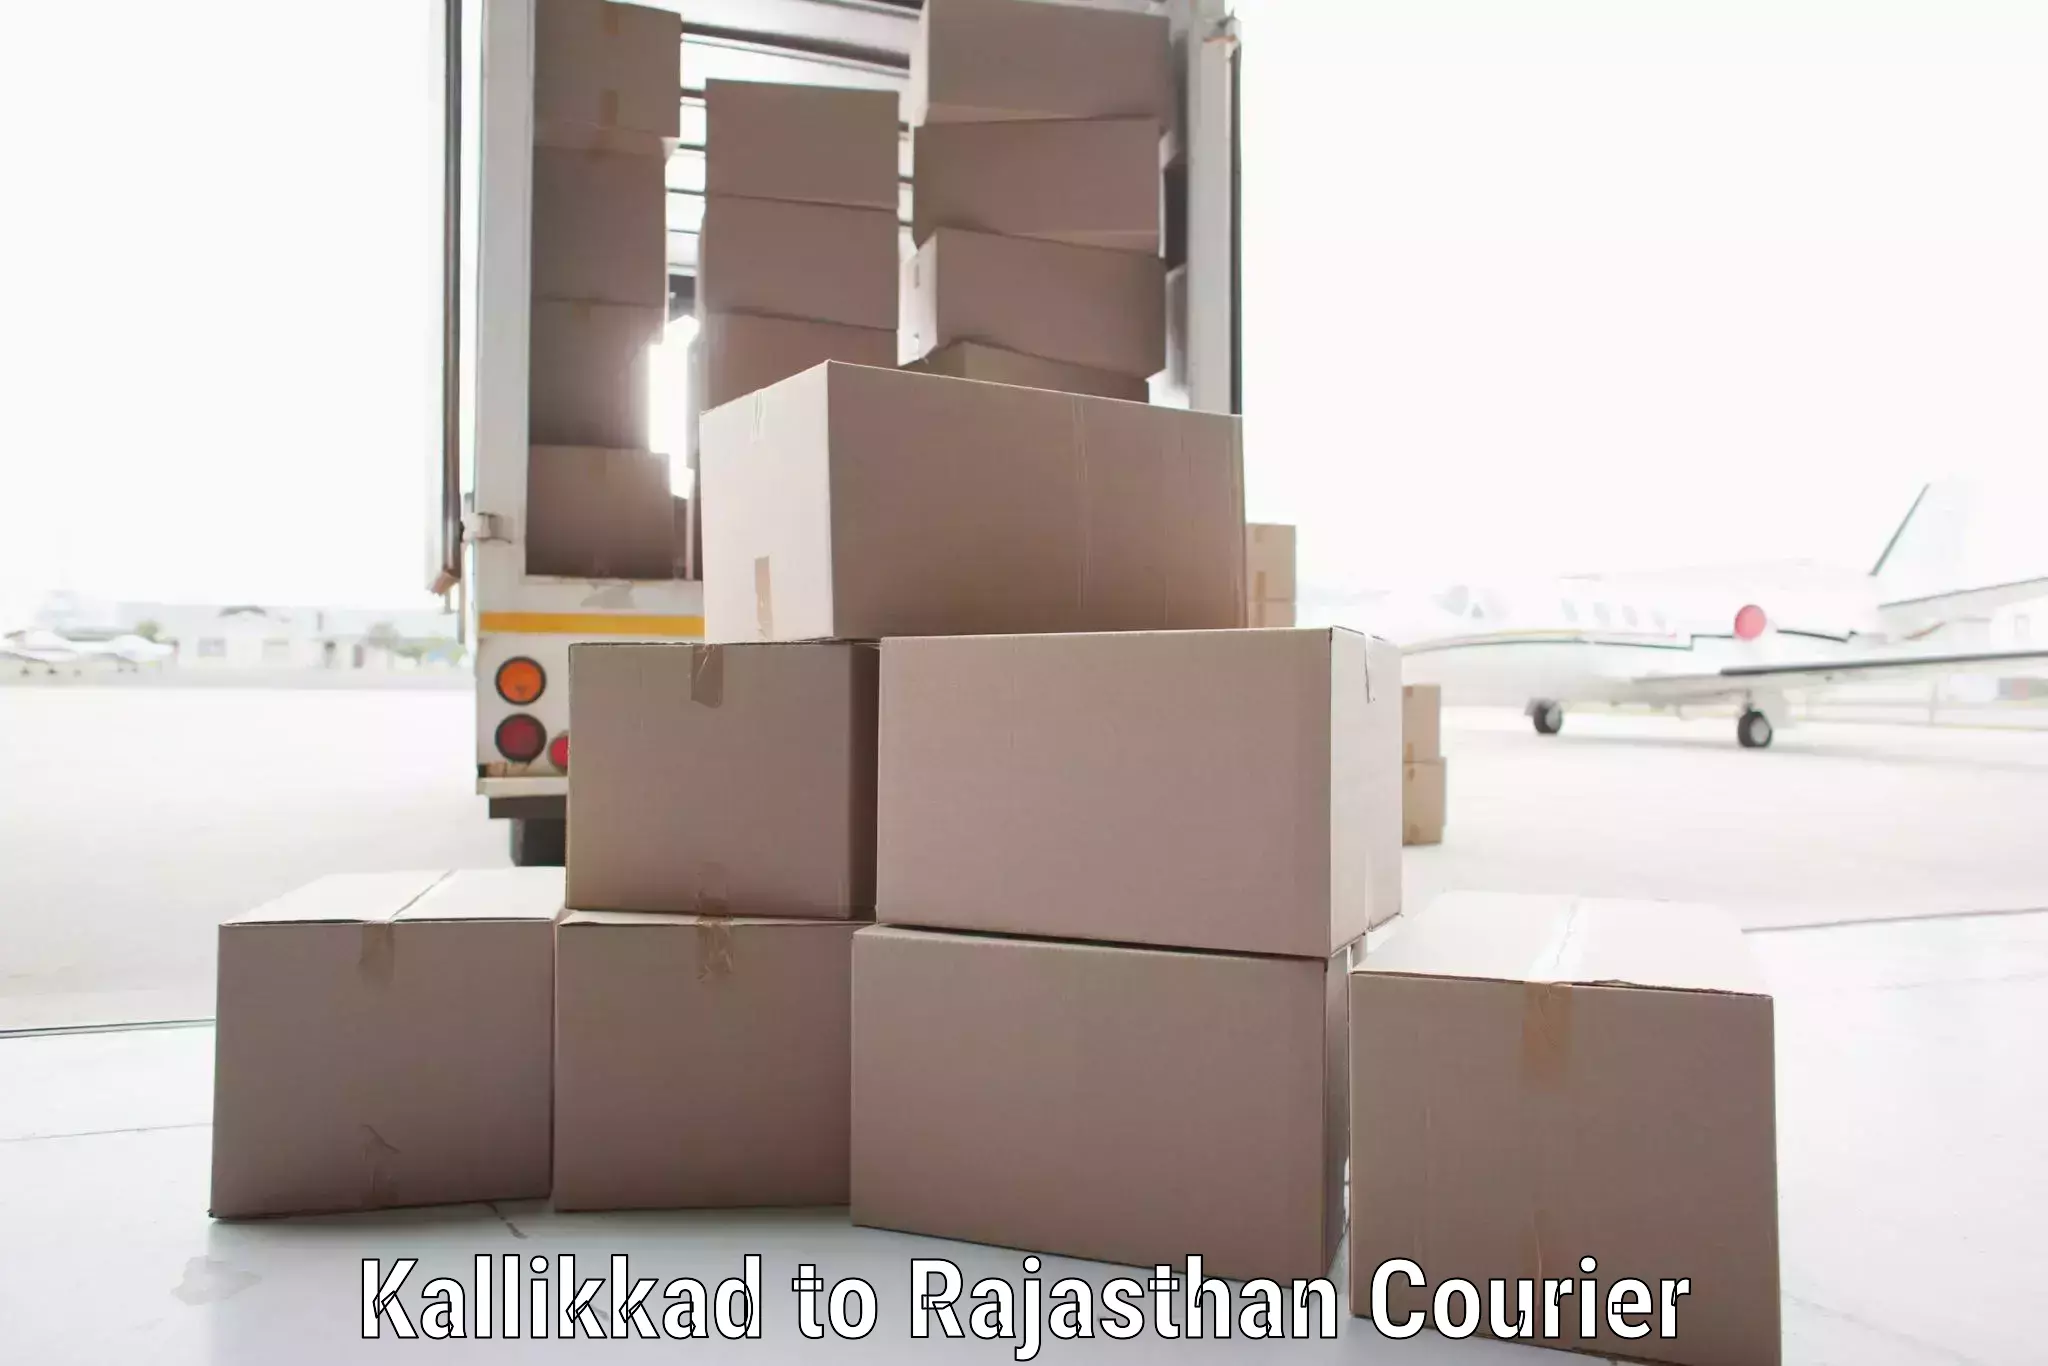 Courier service innovation Kallikkad to Rajasthan